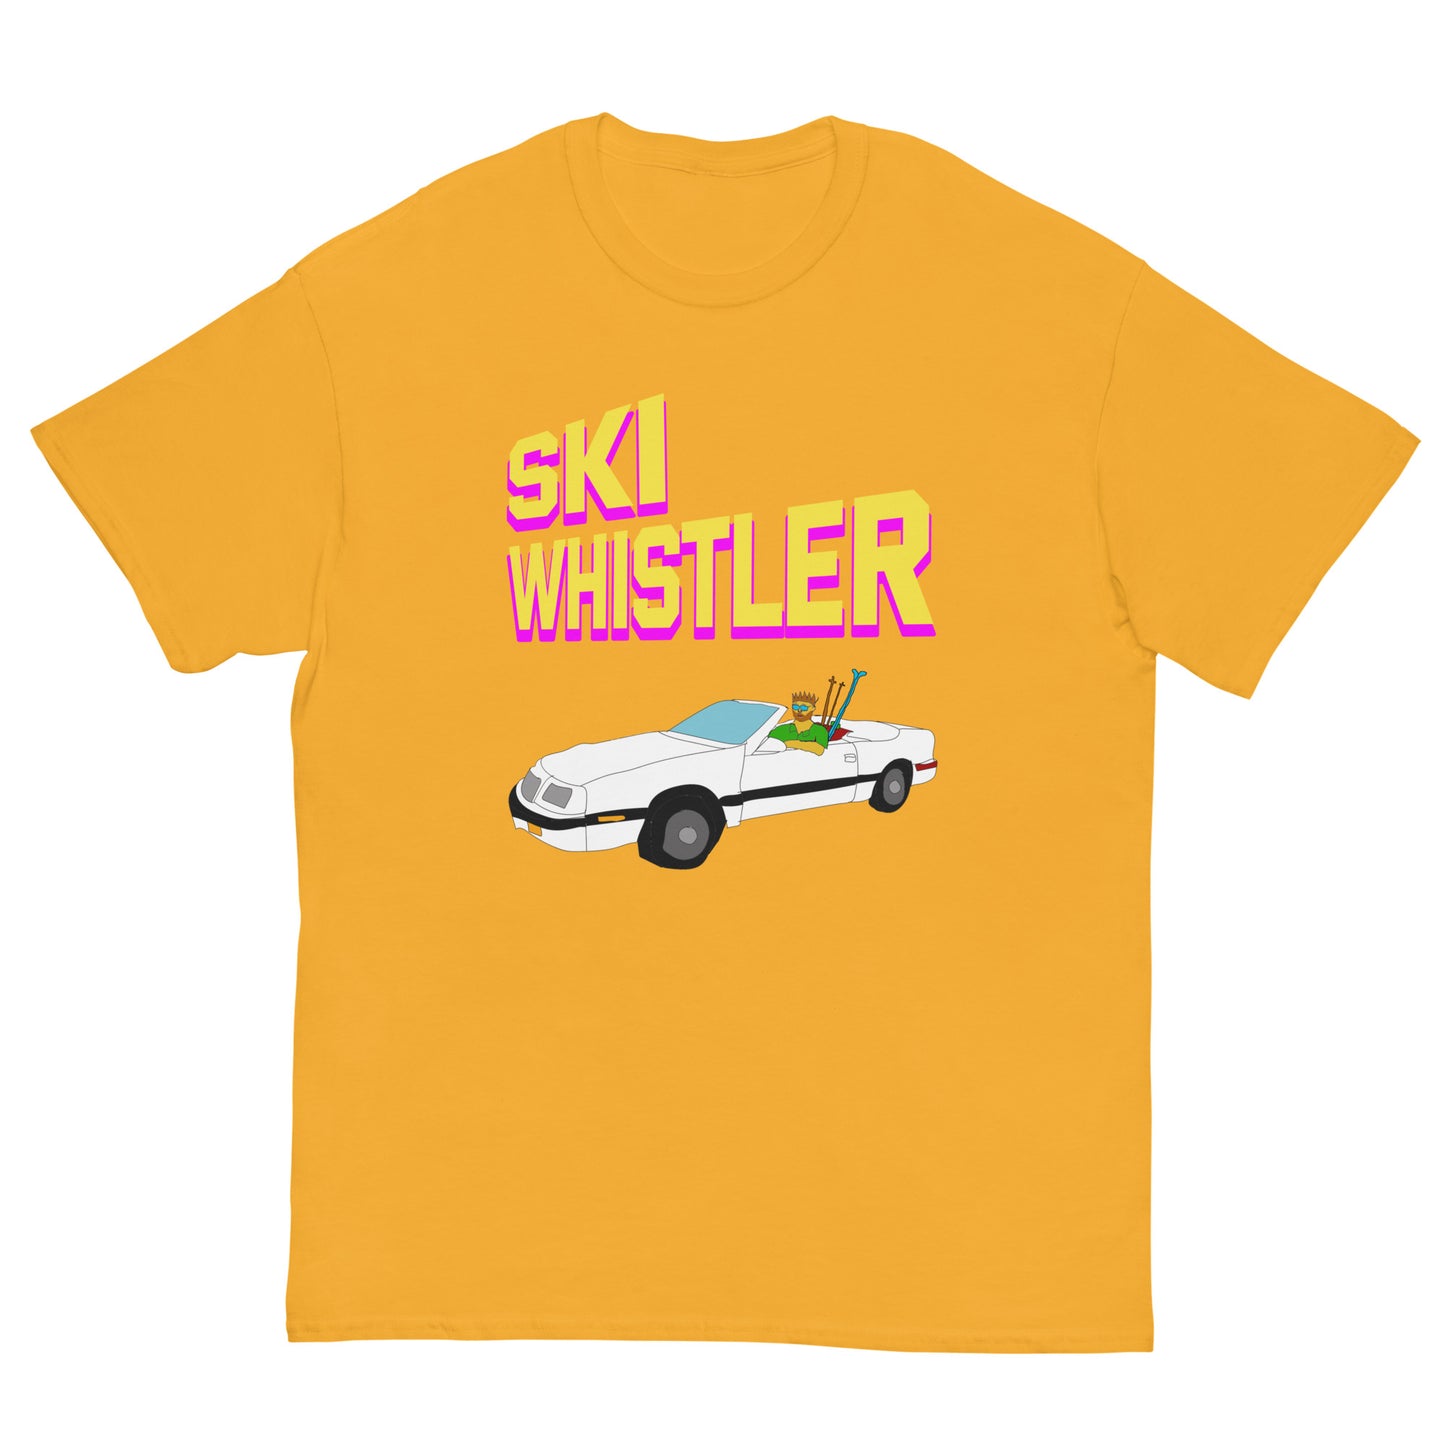 Ski Whistler convertible printed t-shirt